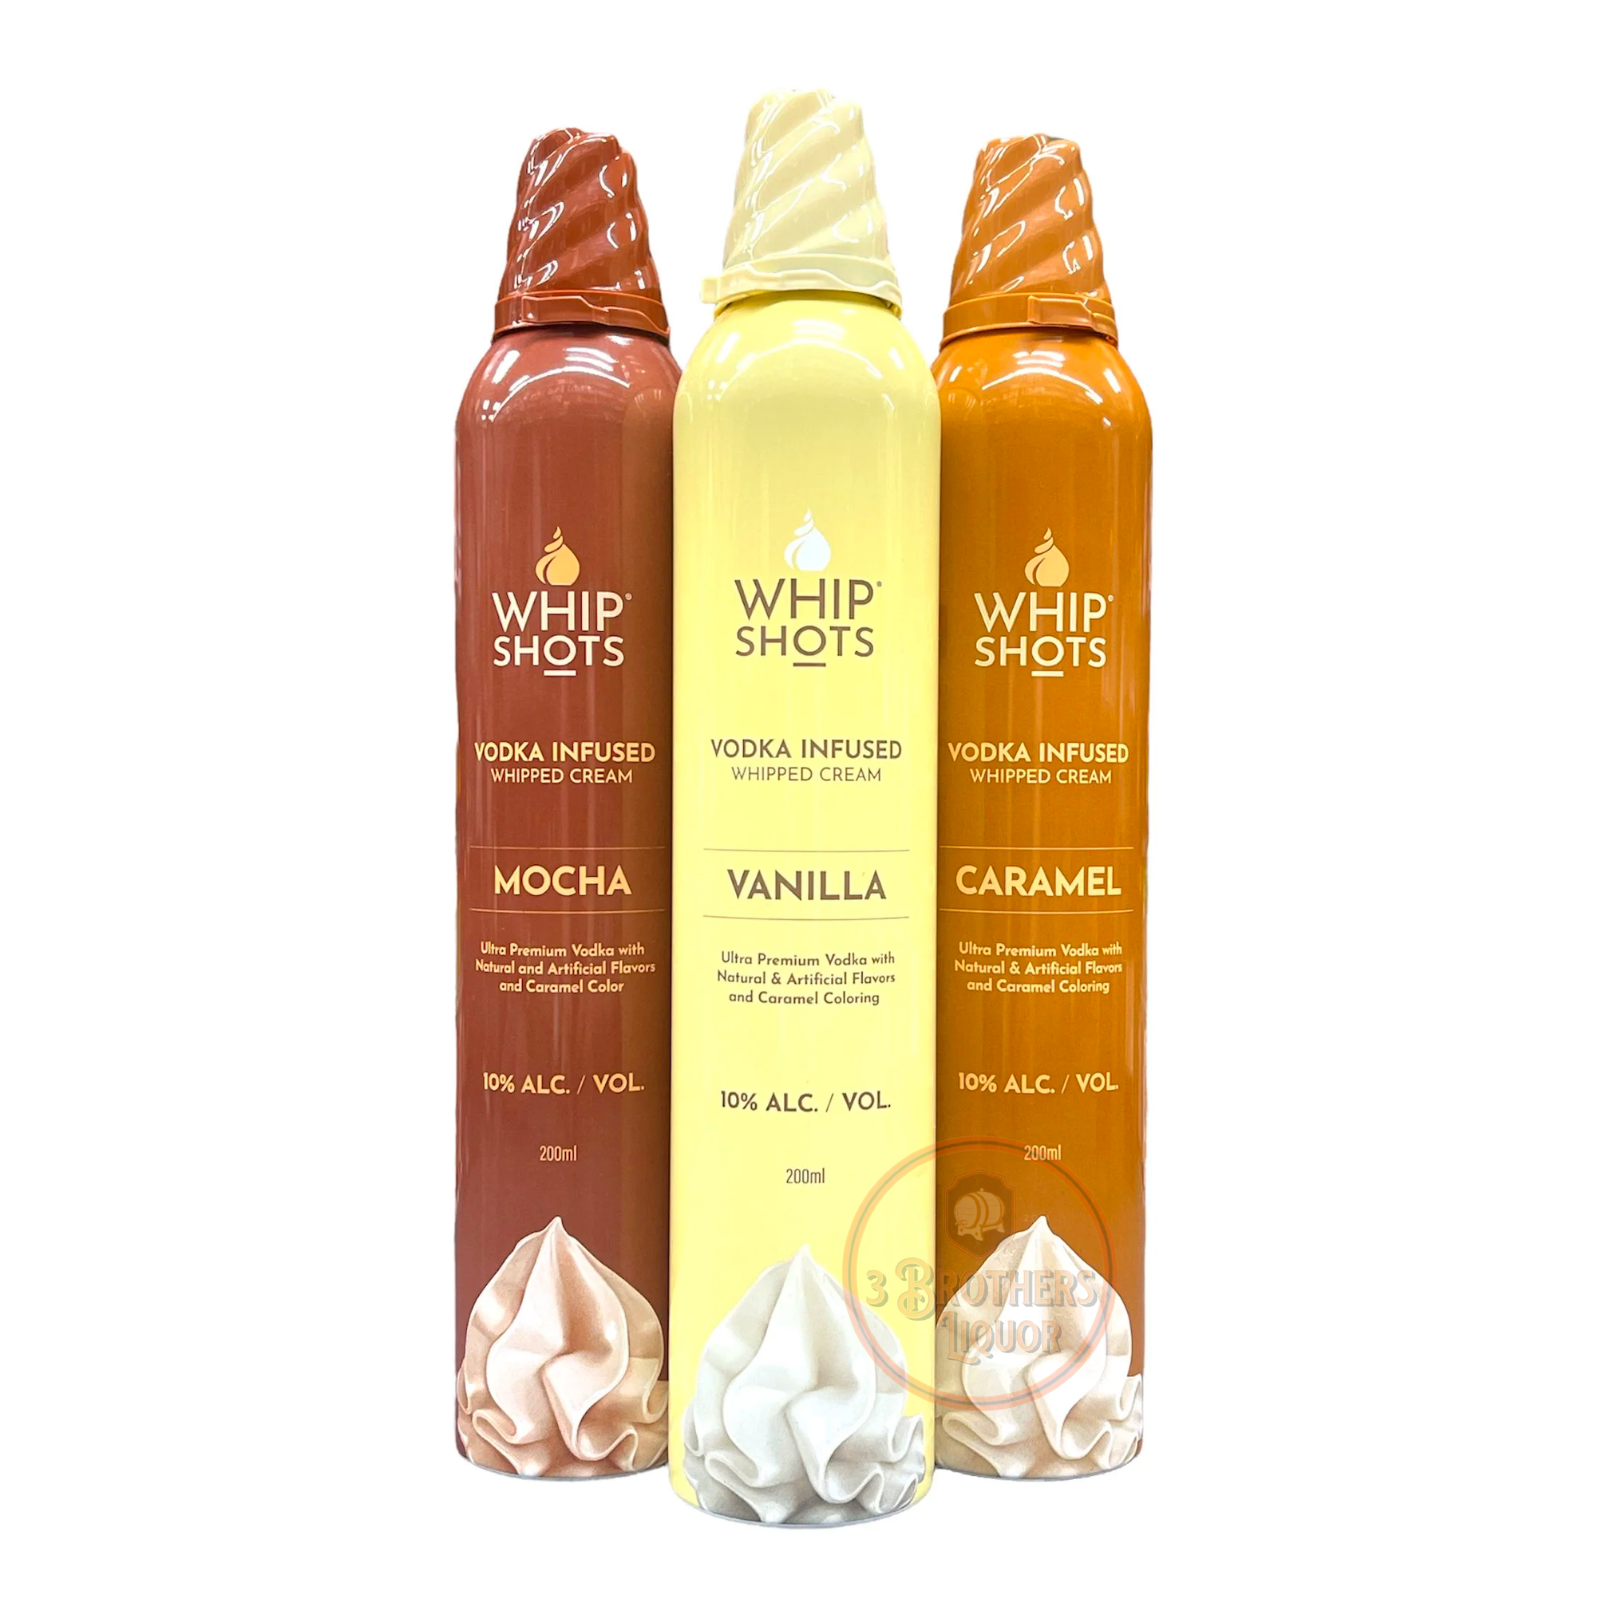 Whip Shots Vodka Infused Whipped Cream 4Pk Bundle Set By Cardi B